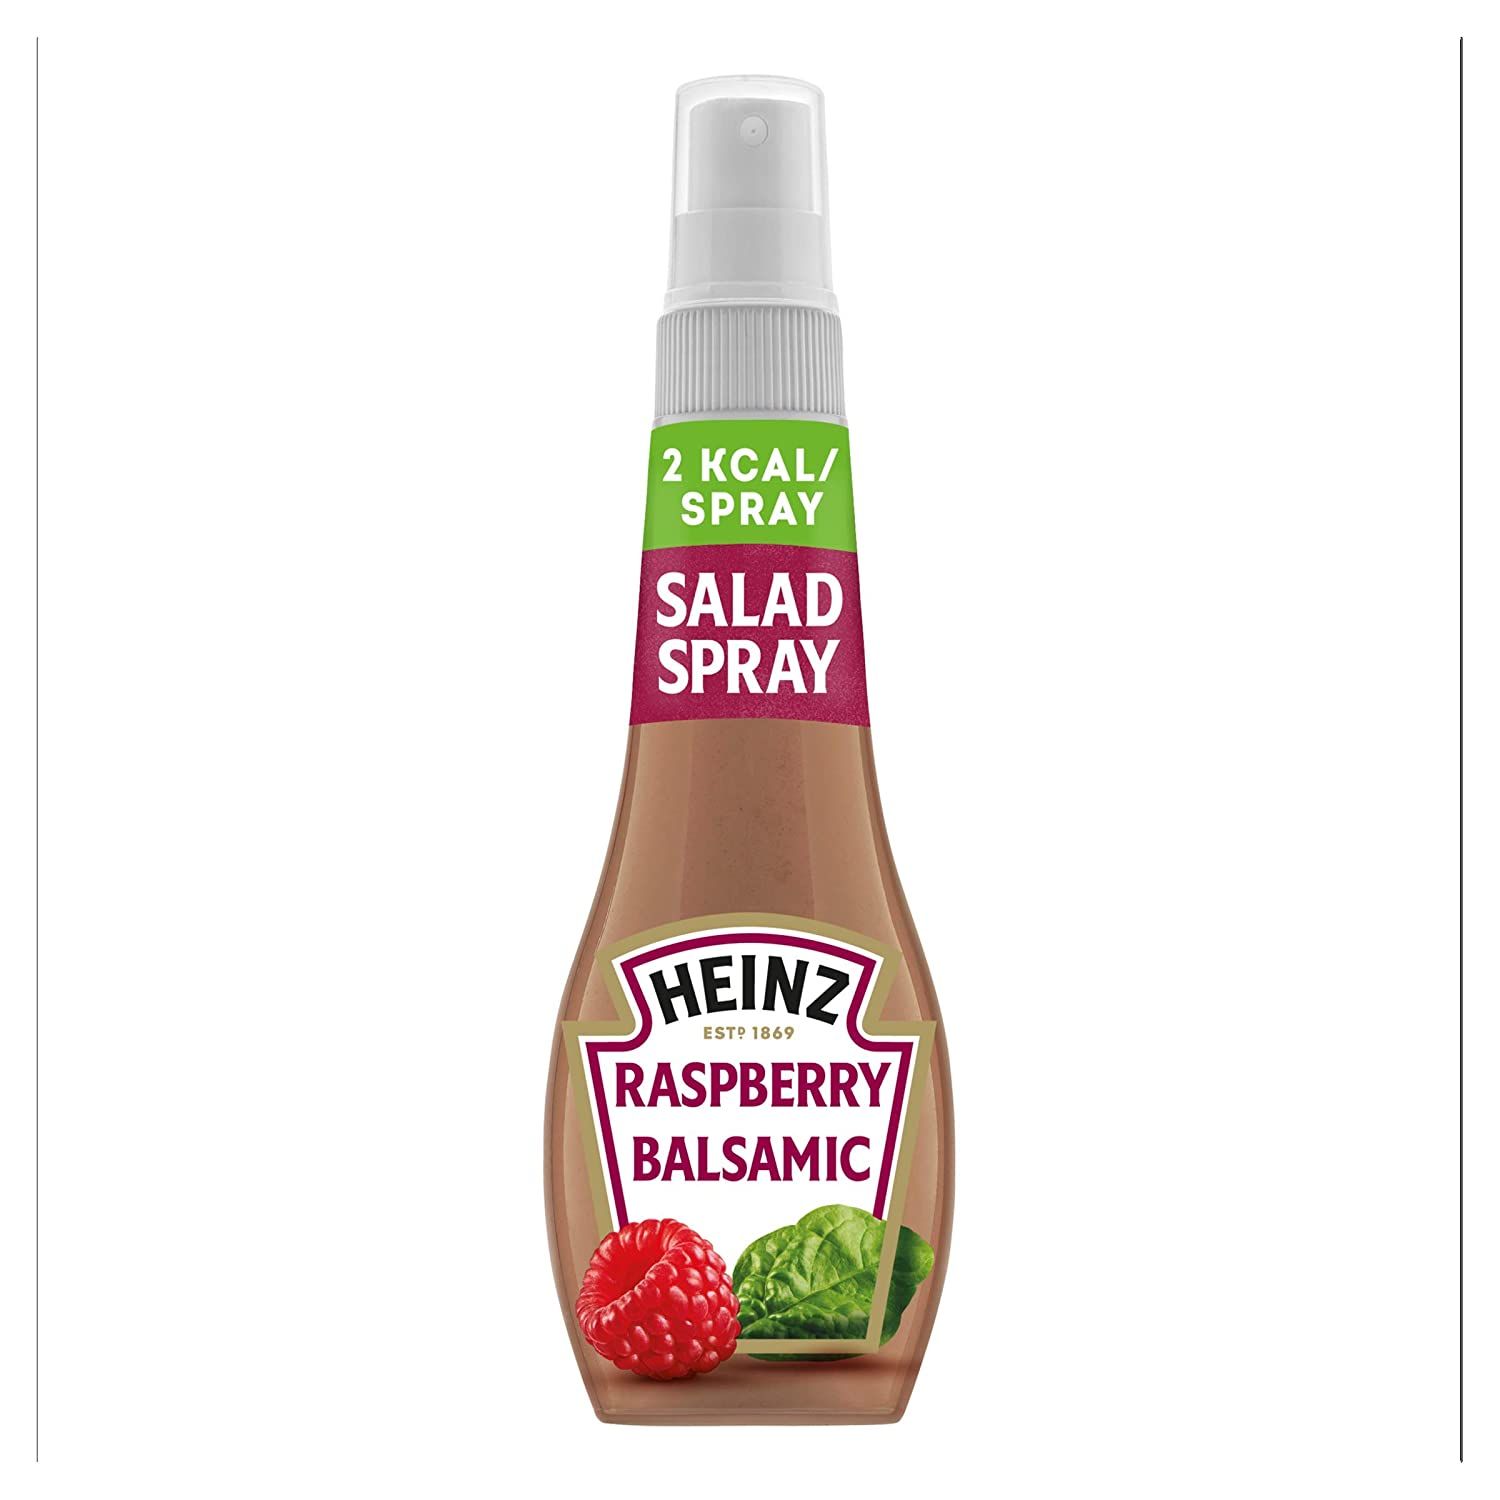 Heinz Salad Spray Raspberry Balsamic Image